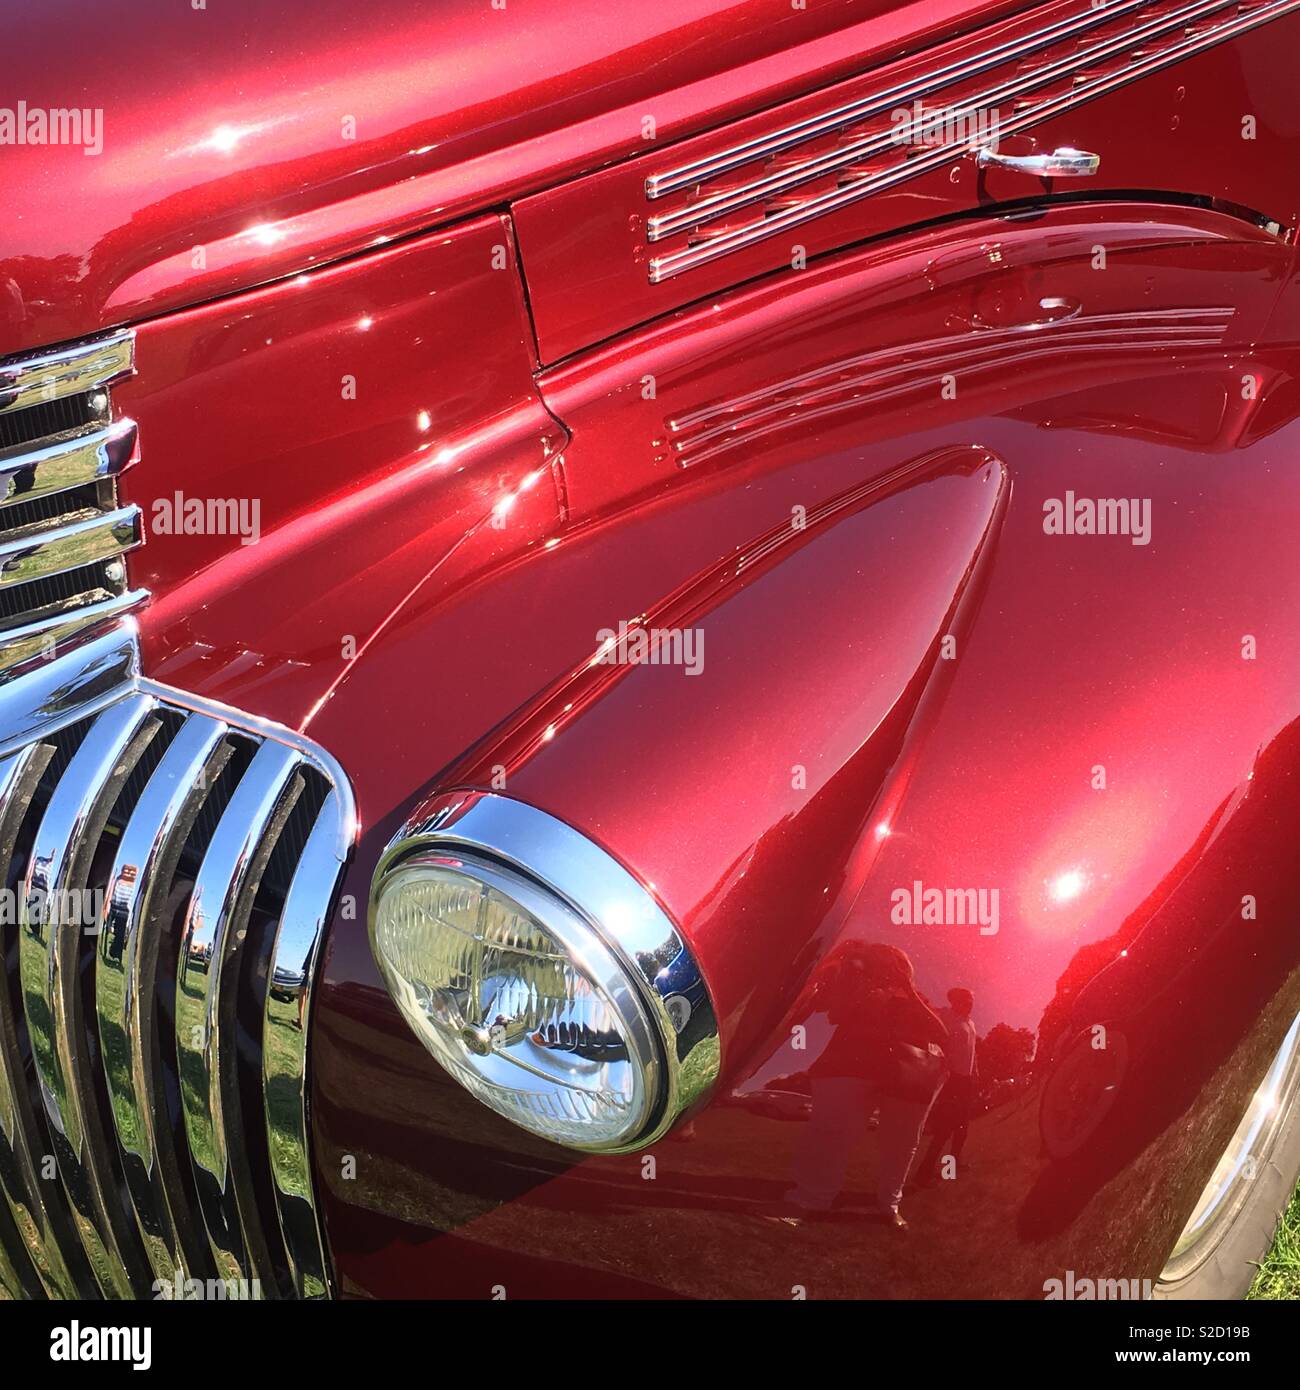 Shiny red Chevy Stock Photo